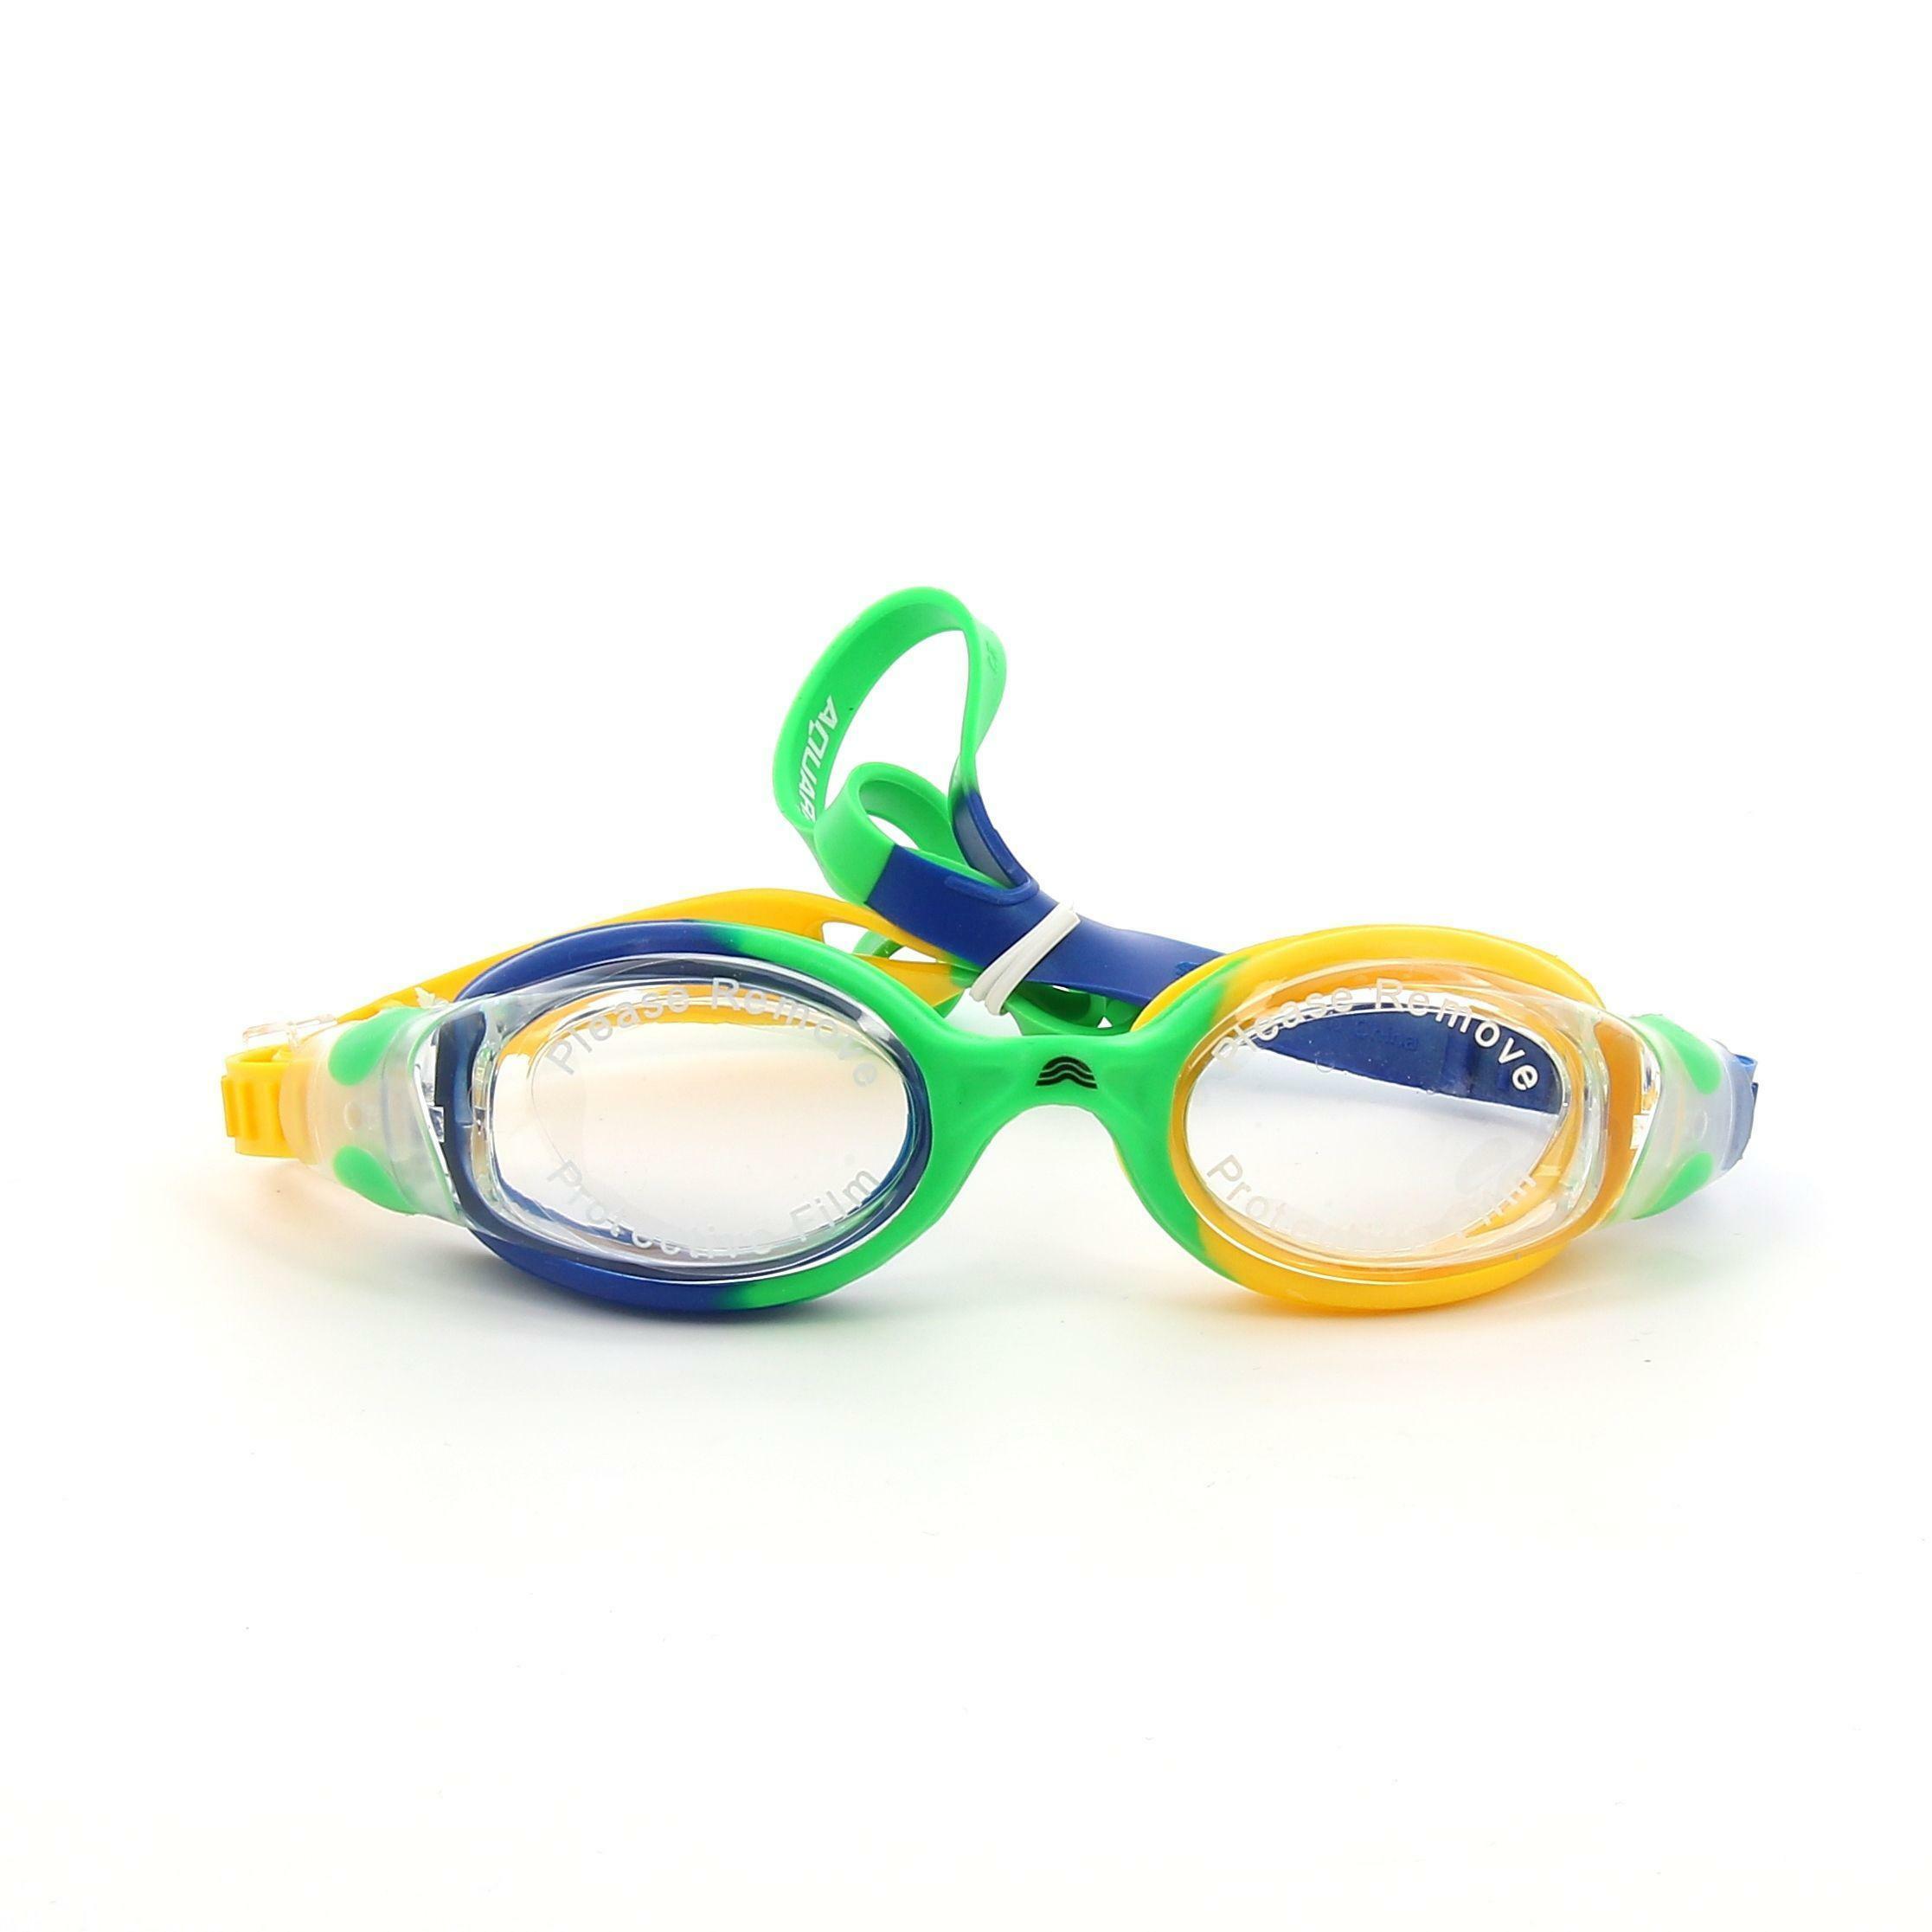 aquarapid aquarapid occhialino swimmer unisex bambino giallo verde